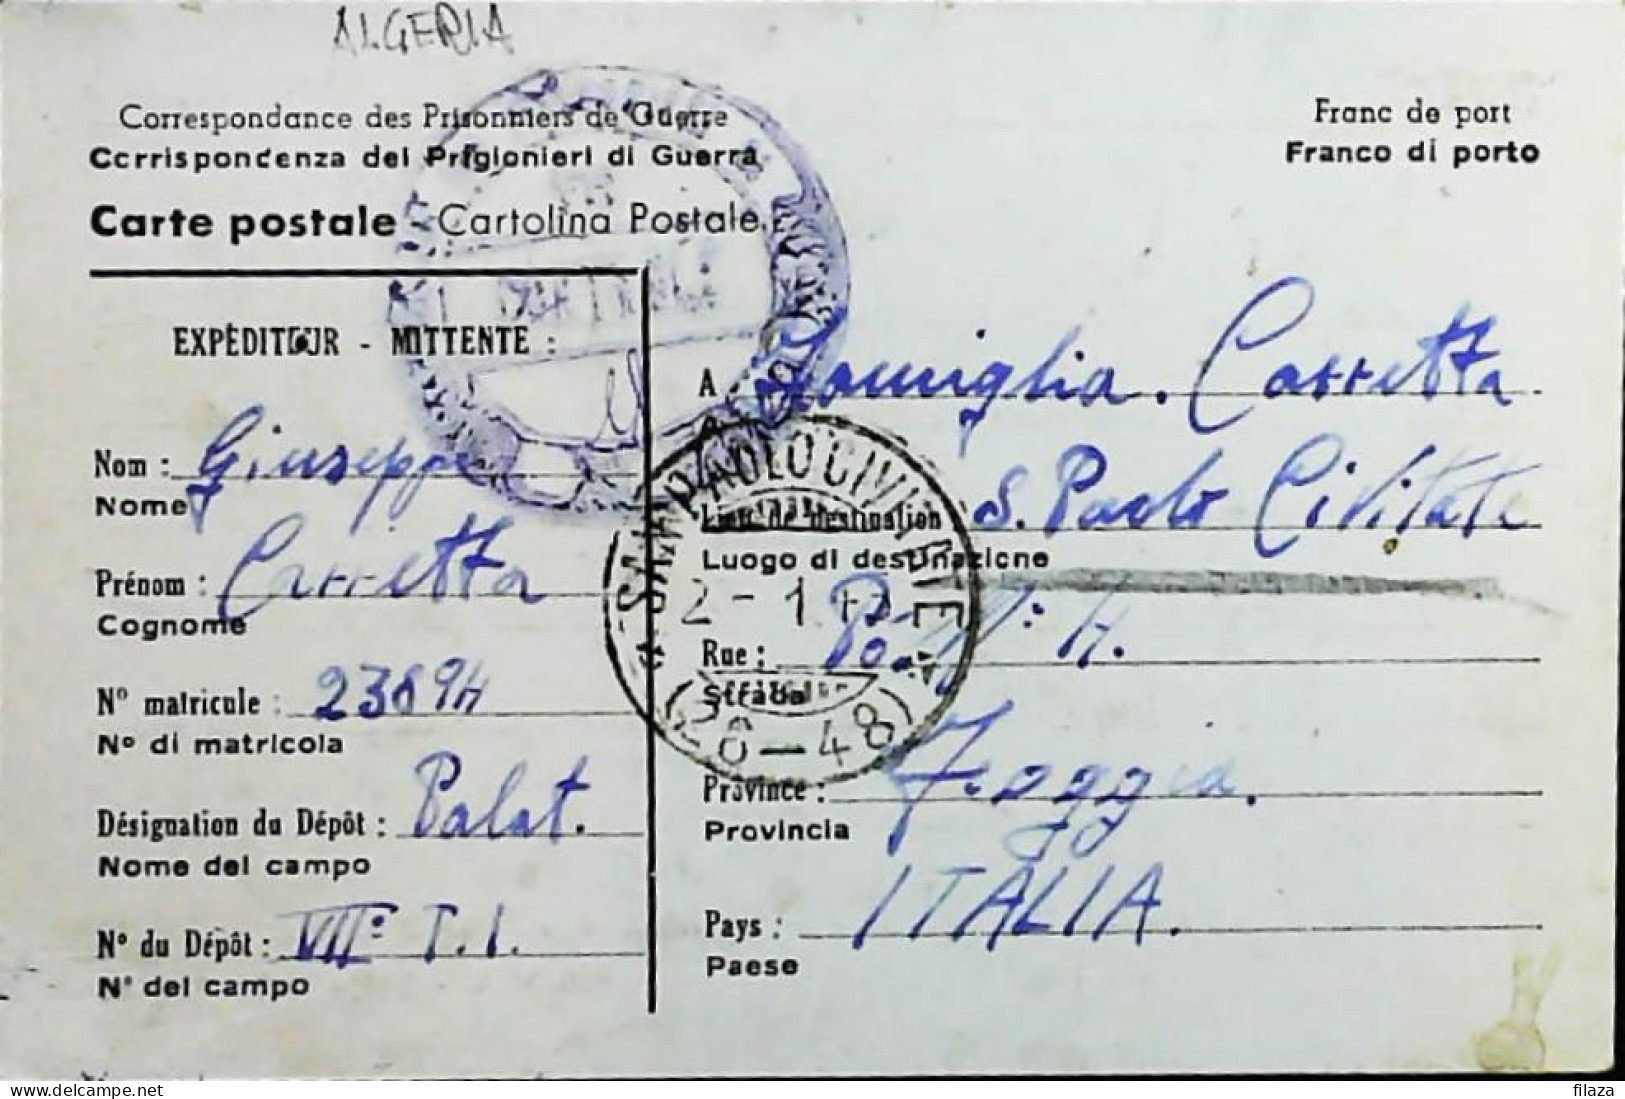 POW WW2 – WWII Italian Prisoner Of War In ALGERIA - Censorship Censure Geprüft  – S7770 - Militaire Post (PM)